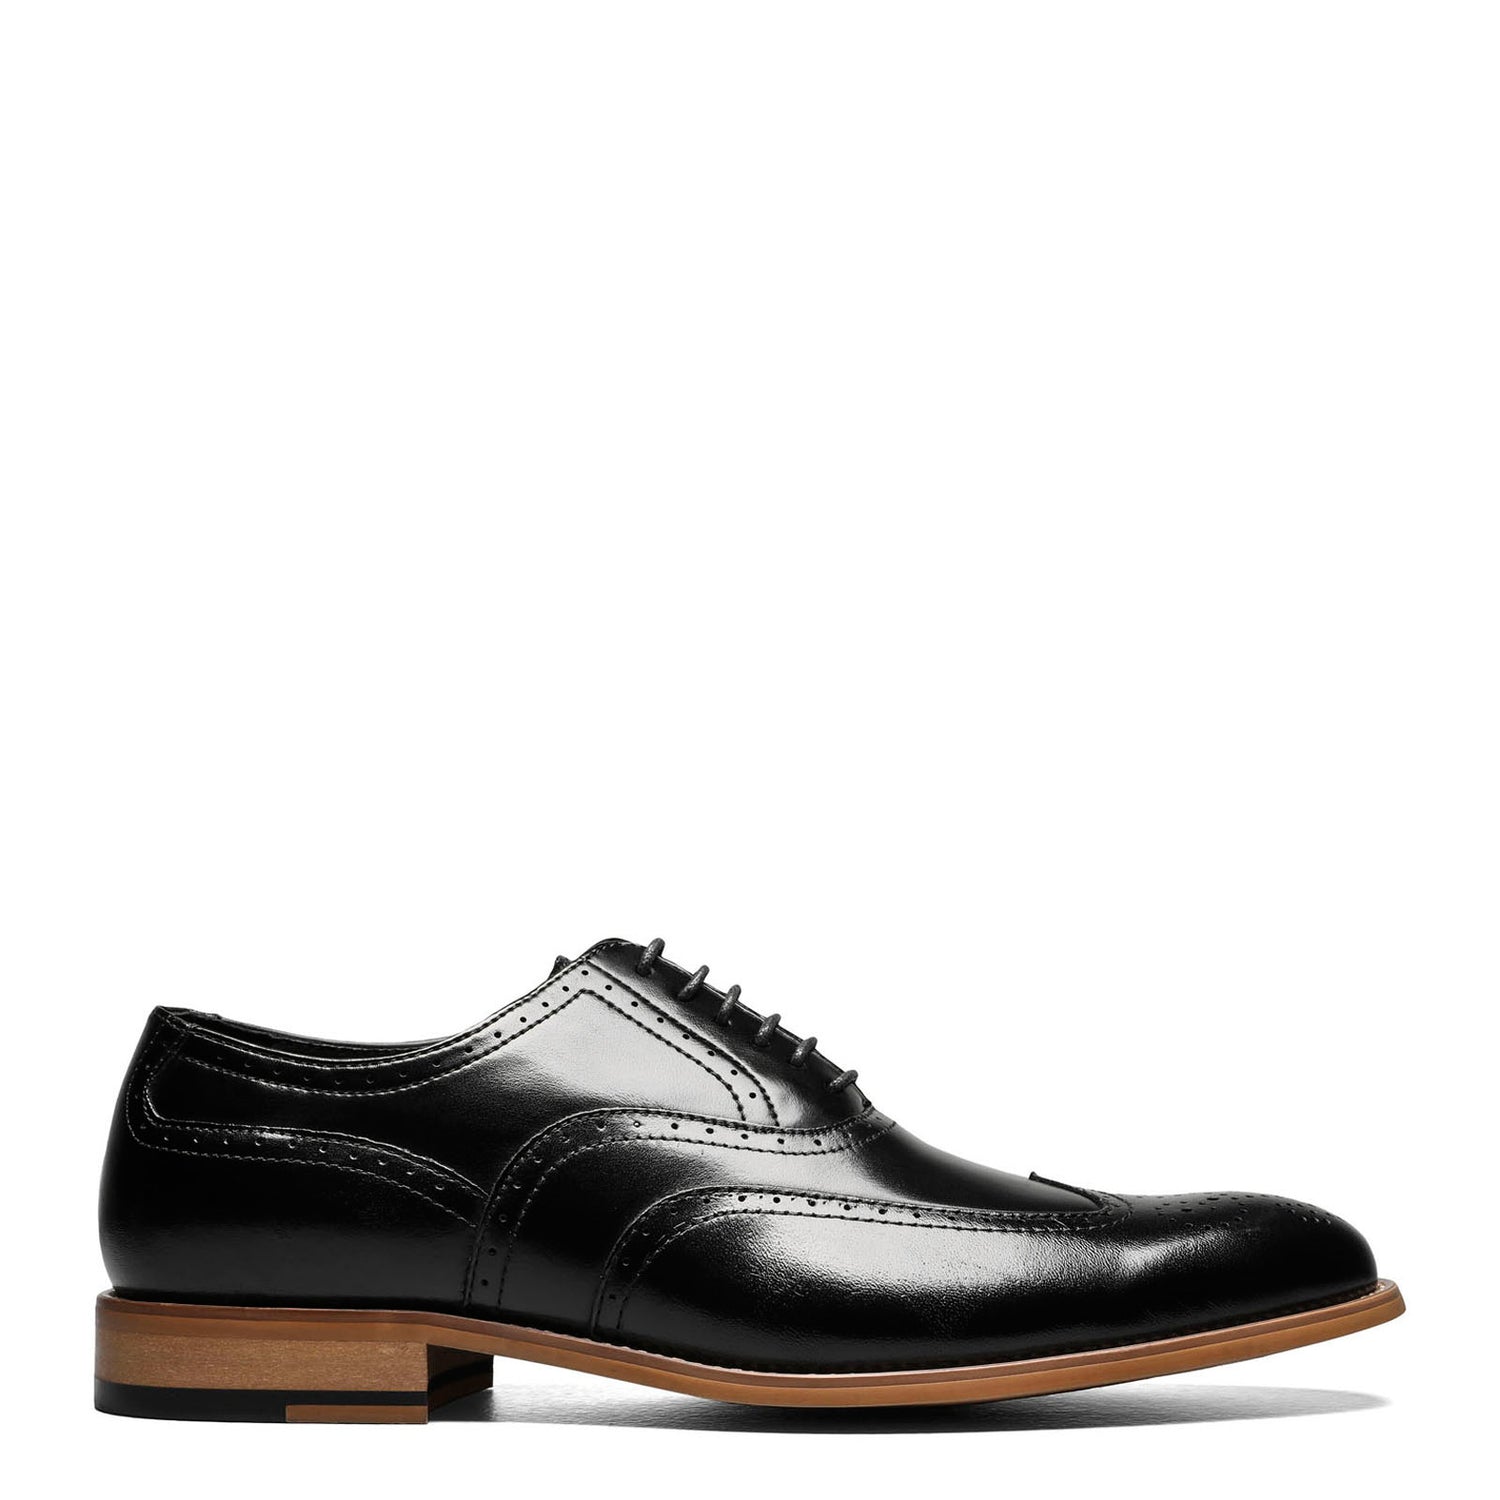 Peltz Shoes  Men's Stacy Adams Dunbar Wingtip Oxford BLACK 25064-001